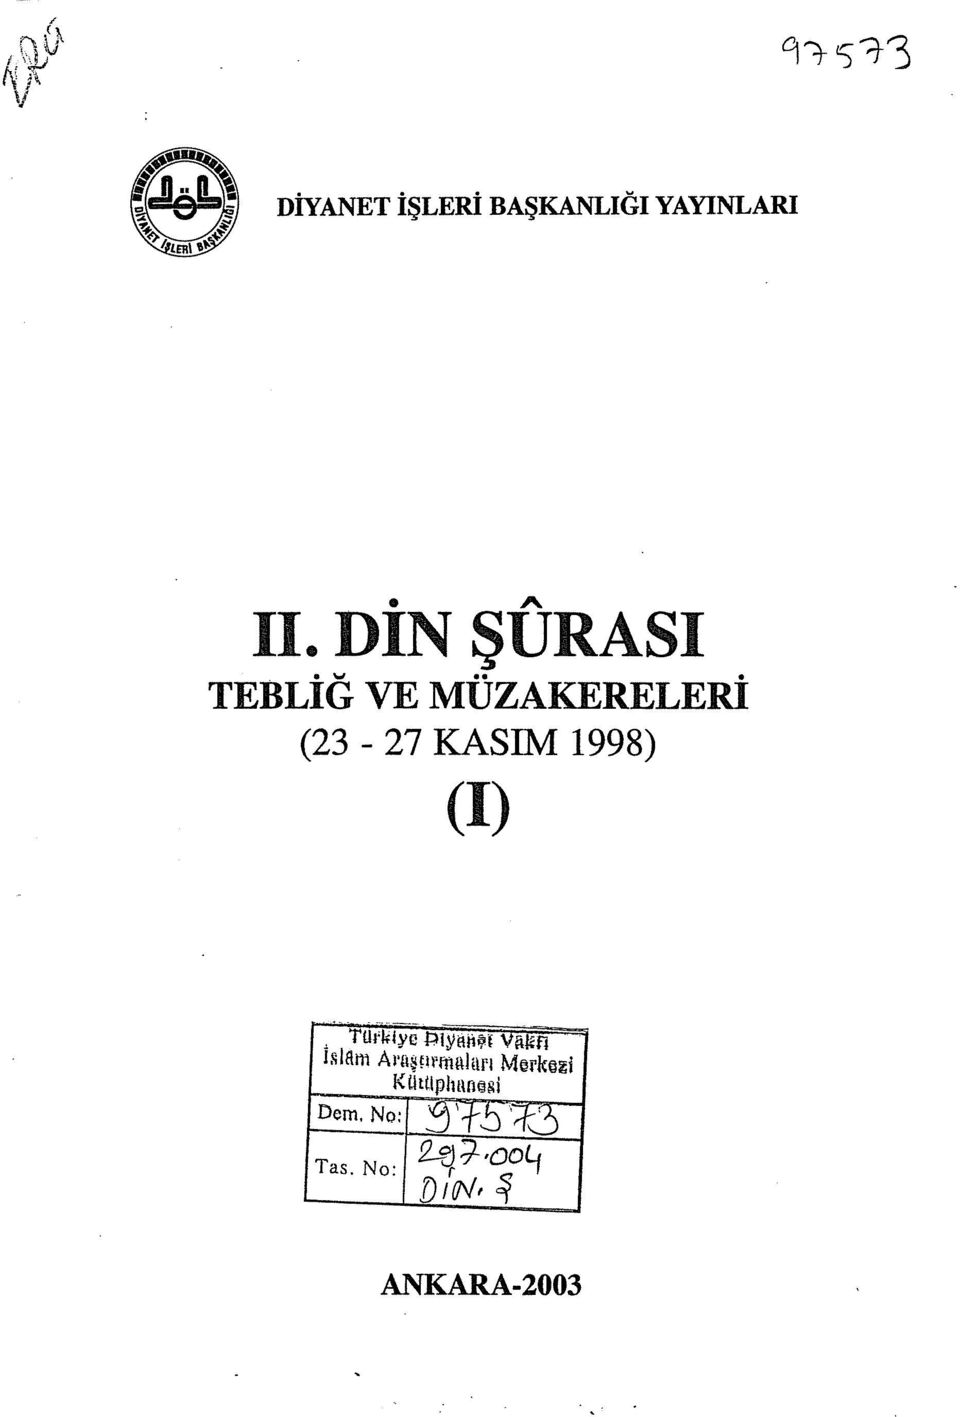 1998) (I), TUı'4lyc Pljii!